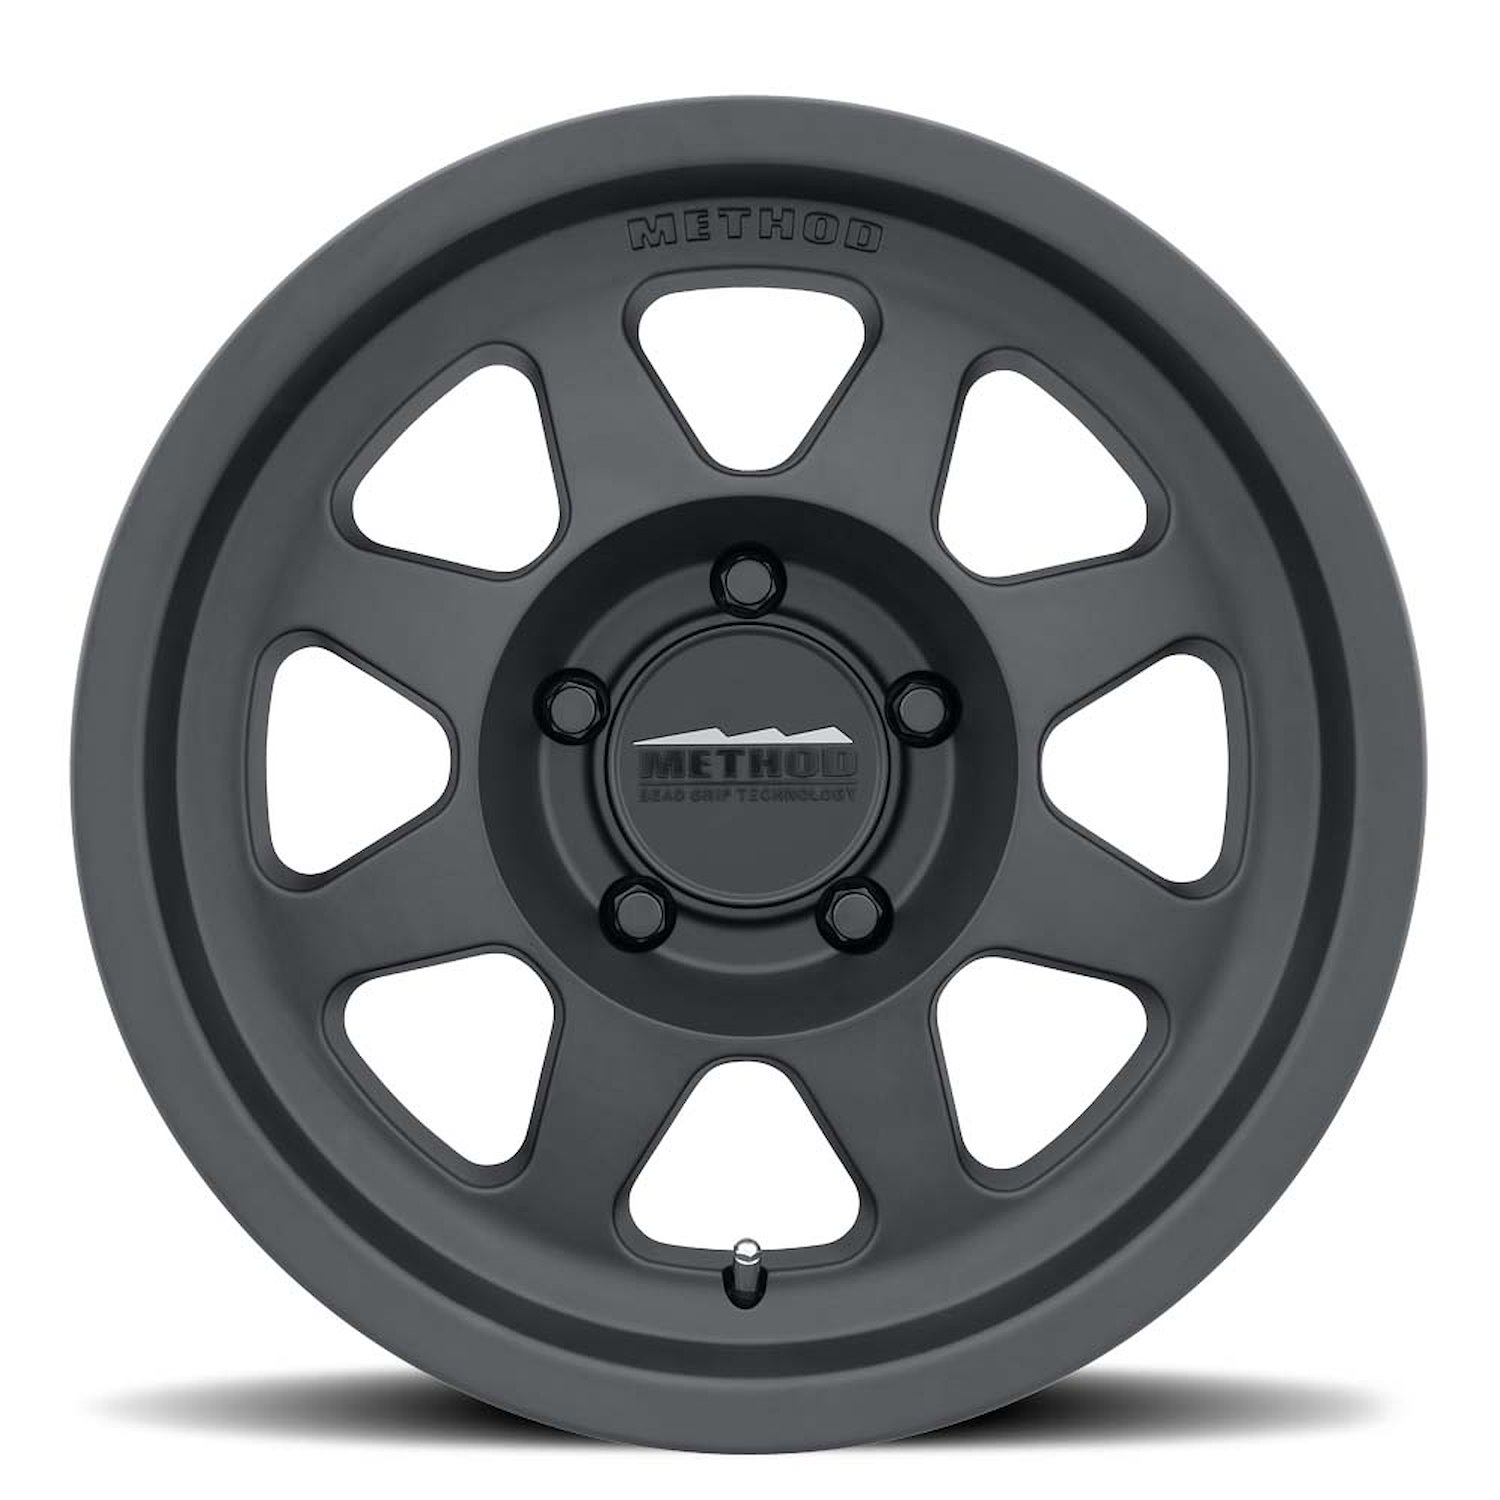 MR70177556550 TRAIL MR701 Bead Grip Wheel [Size: 17" x 7.5"] Matte Black